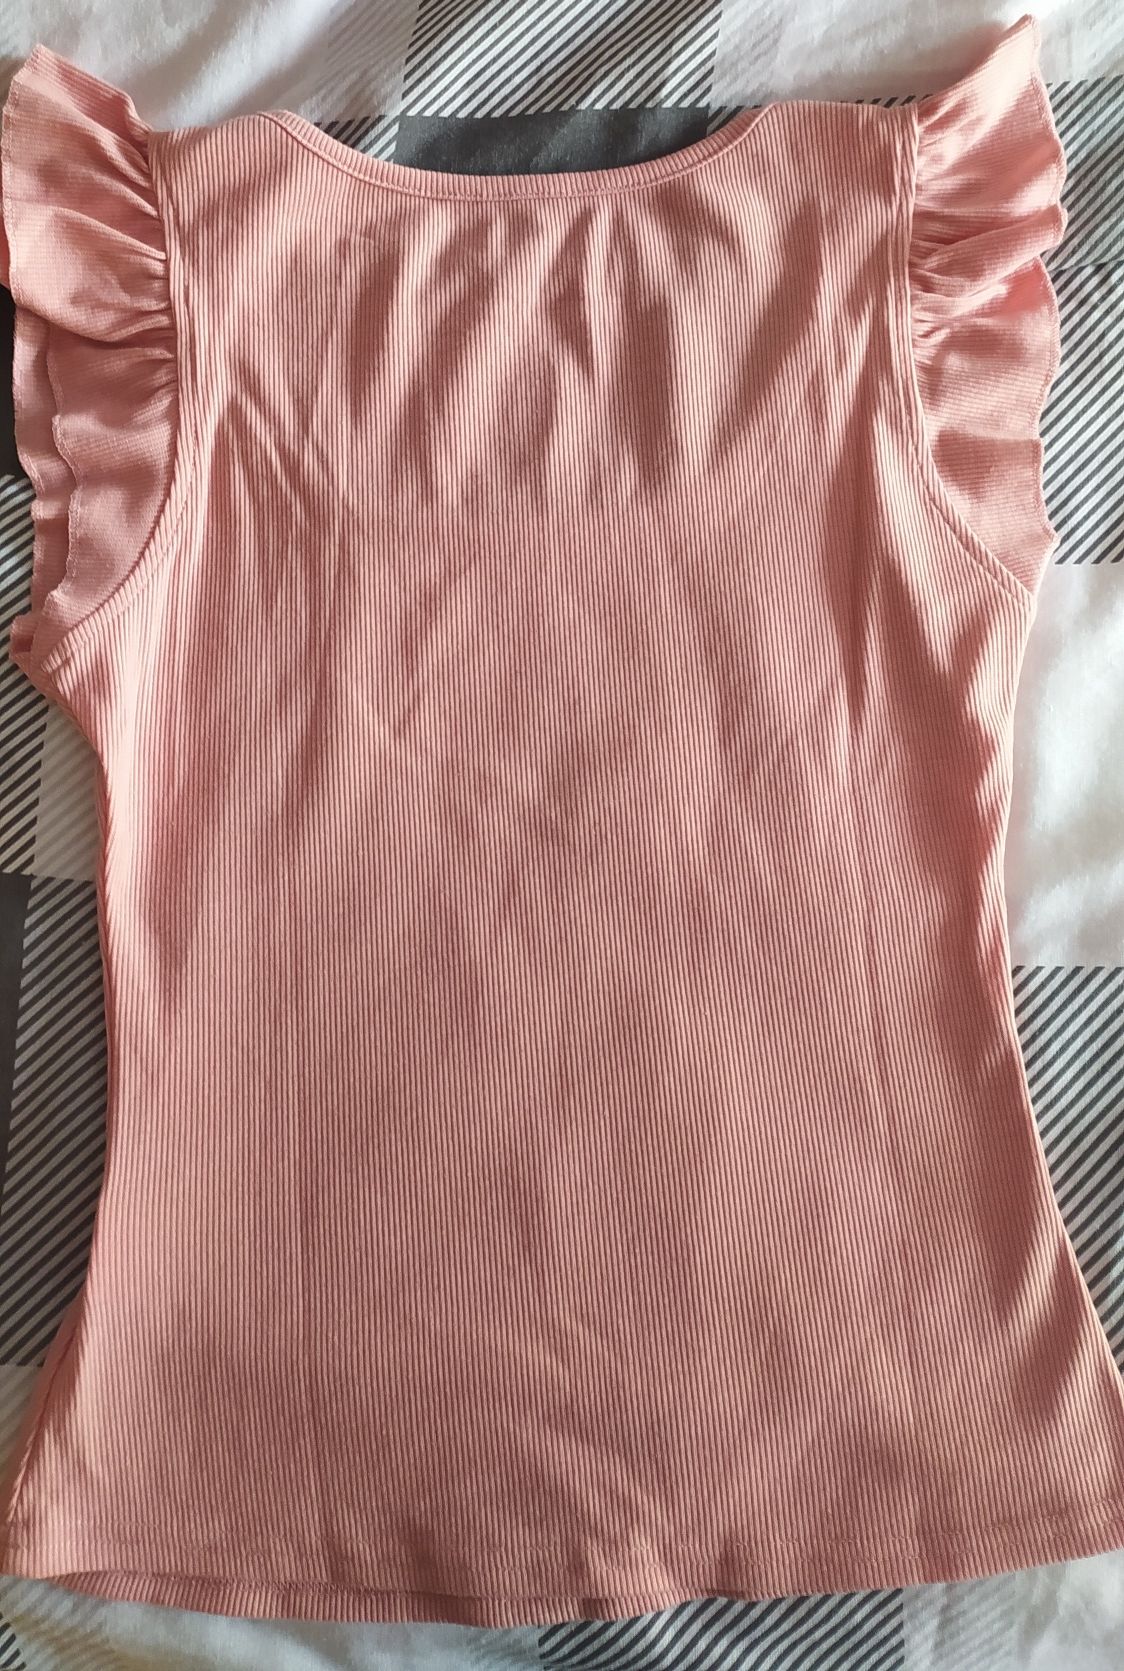 Damska różowa bluzka bez rękawów